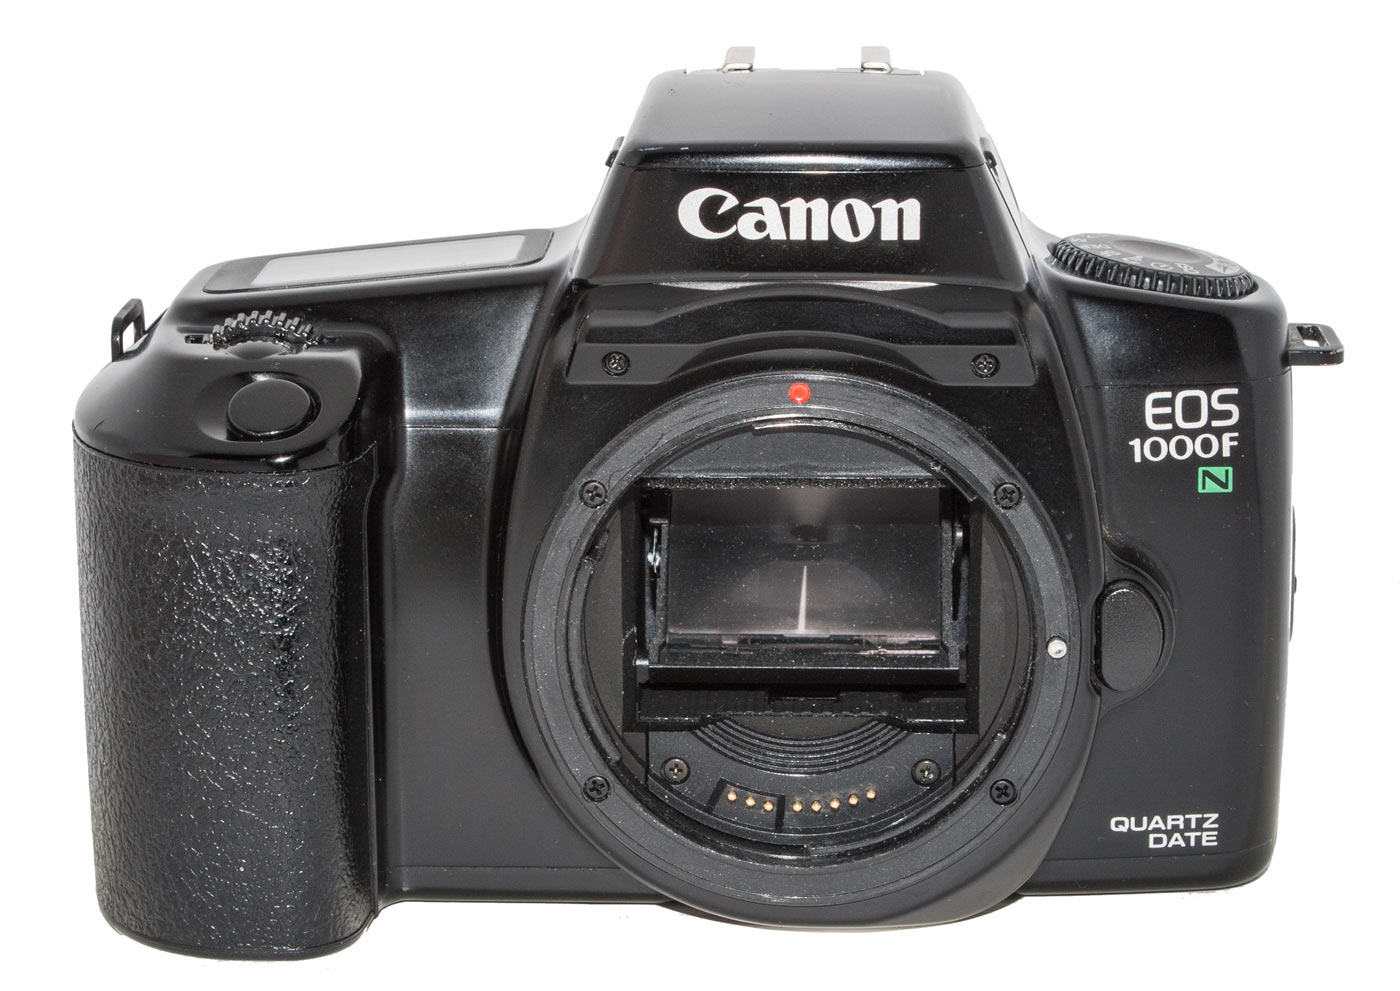 Canon EOS 1000 FN QD